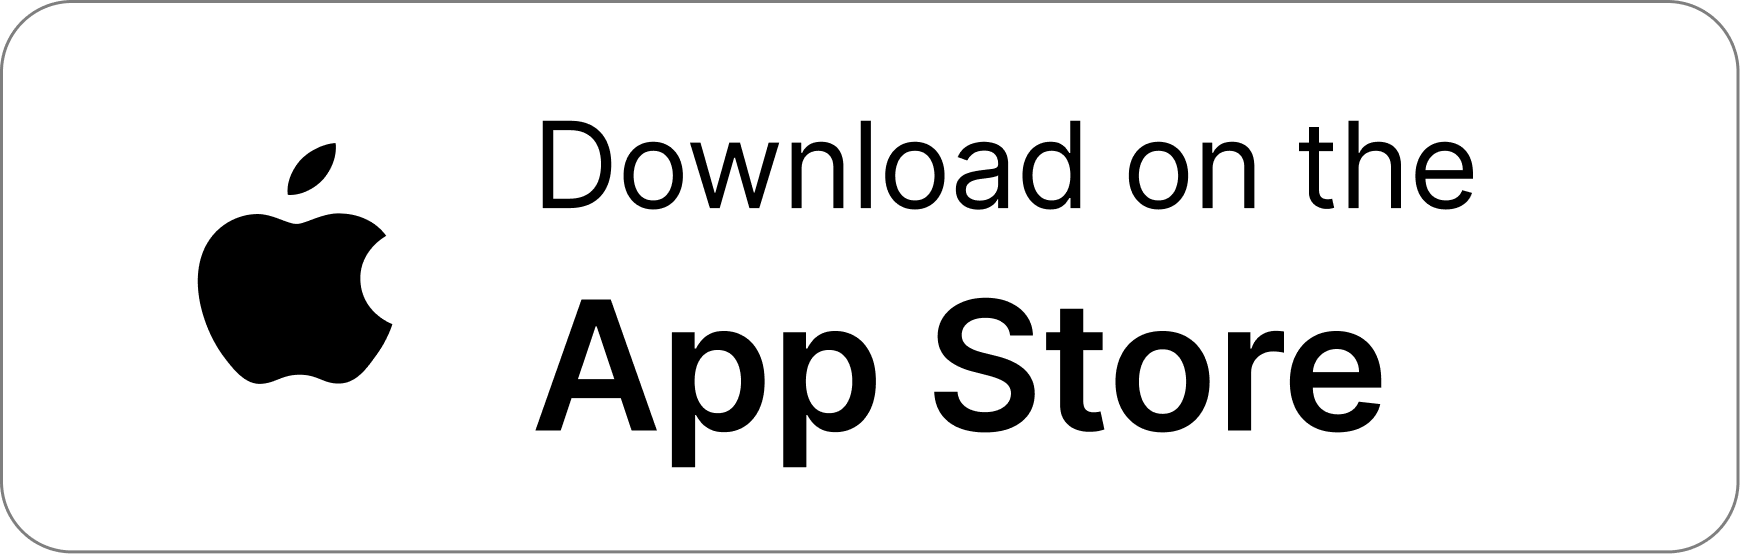 App Store White button